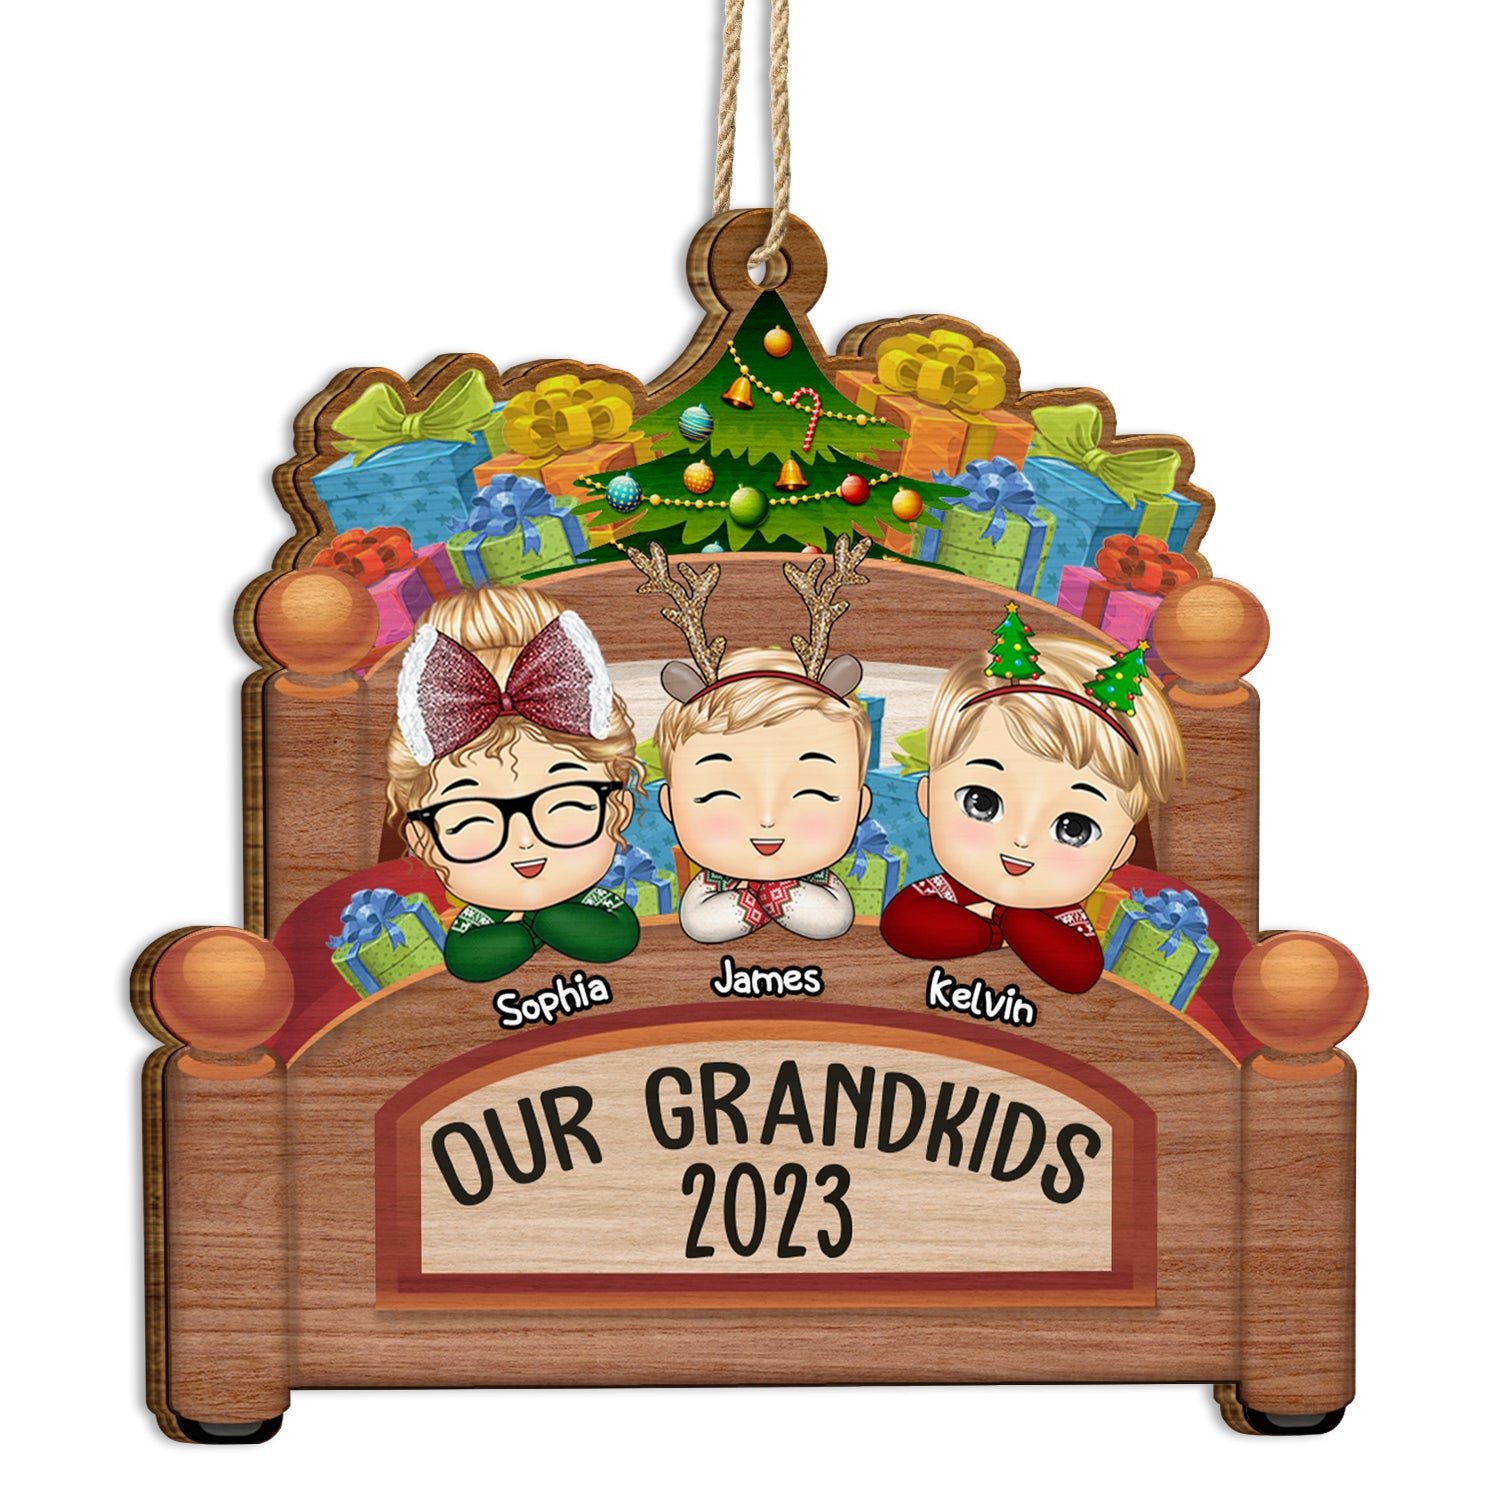 Grandkids In Bed - Christmas, Loving Gift For Grandpa, Grandma, Grandparents - Personalized Custom Shaped Wooden Ornament